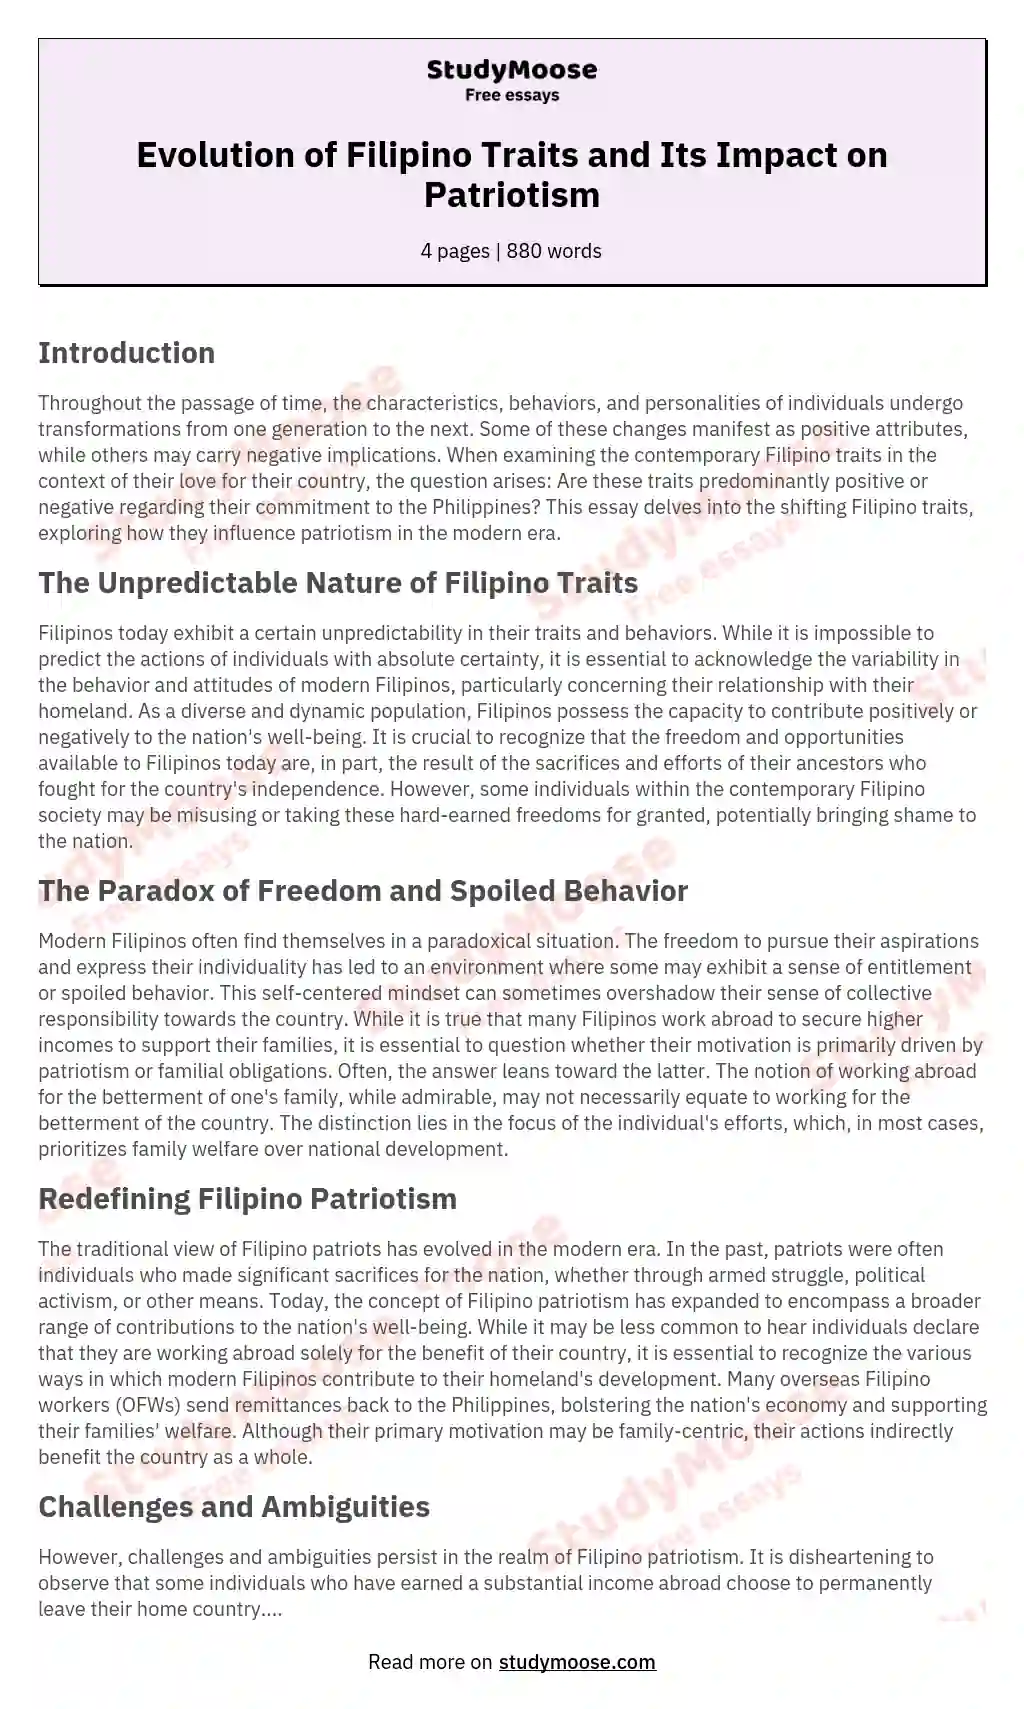 Evolution of Filipino Traits and Its Impact on Patriotism essay